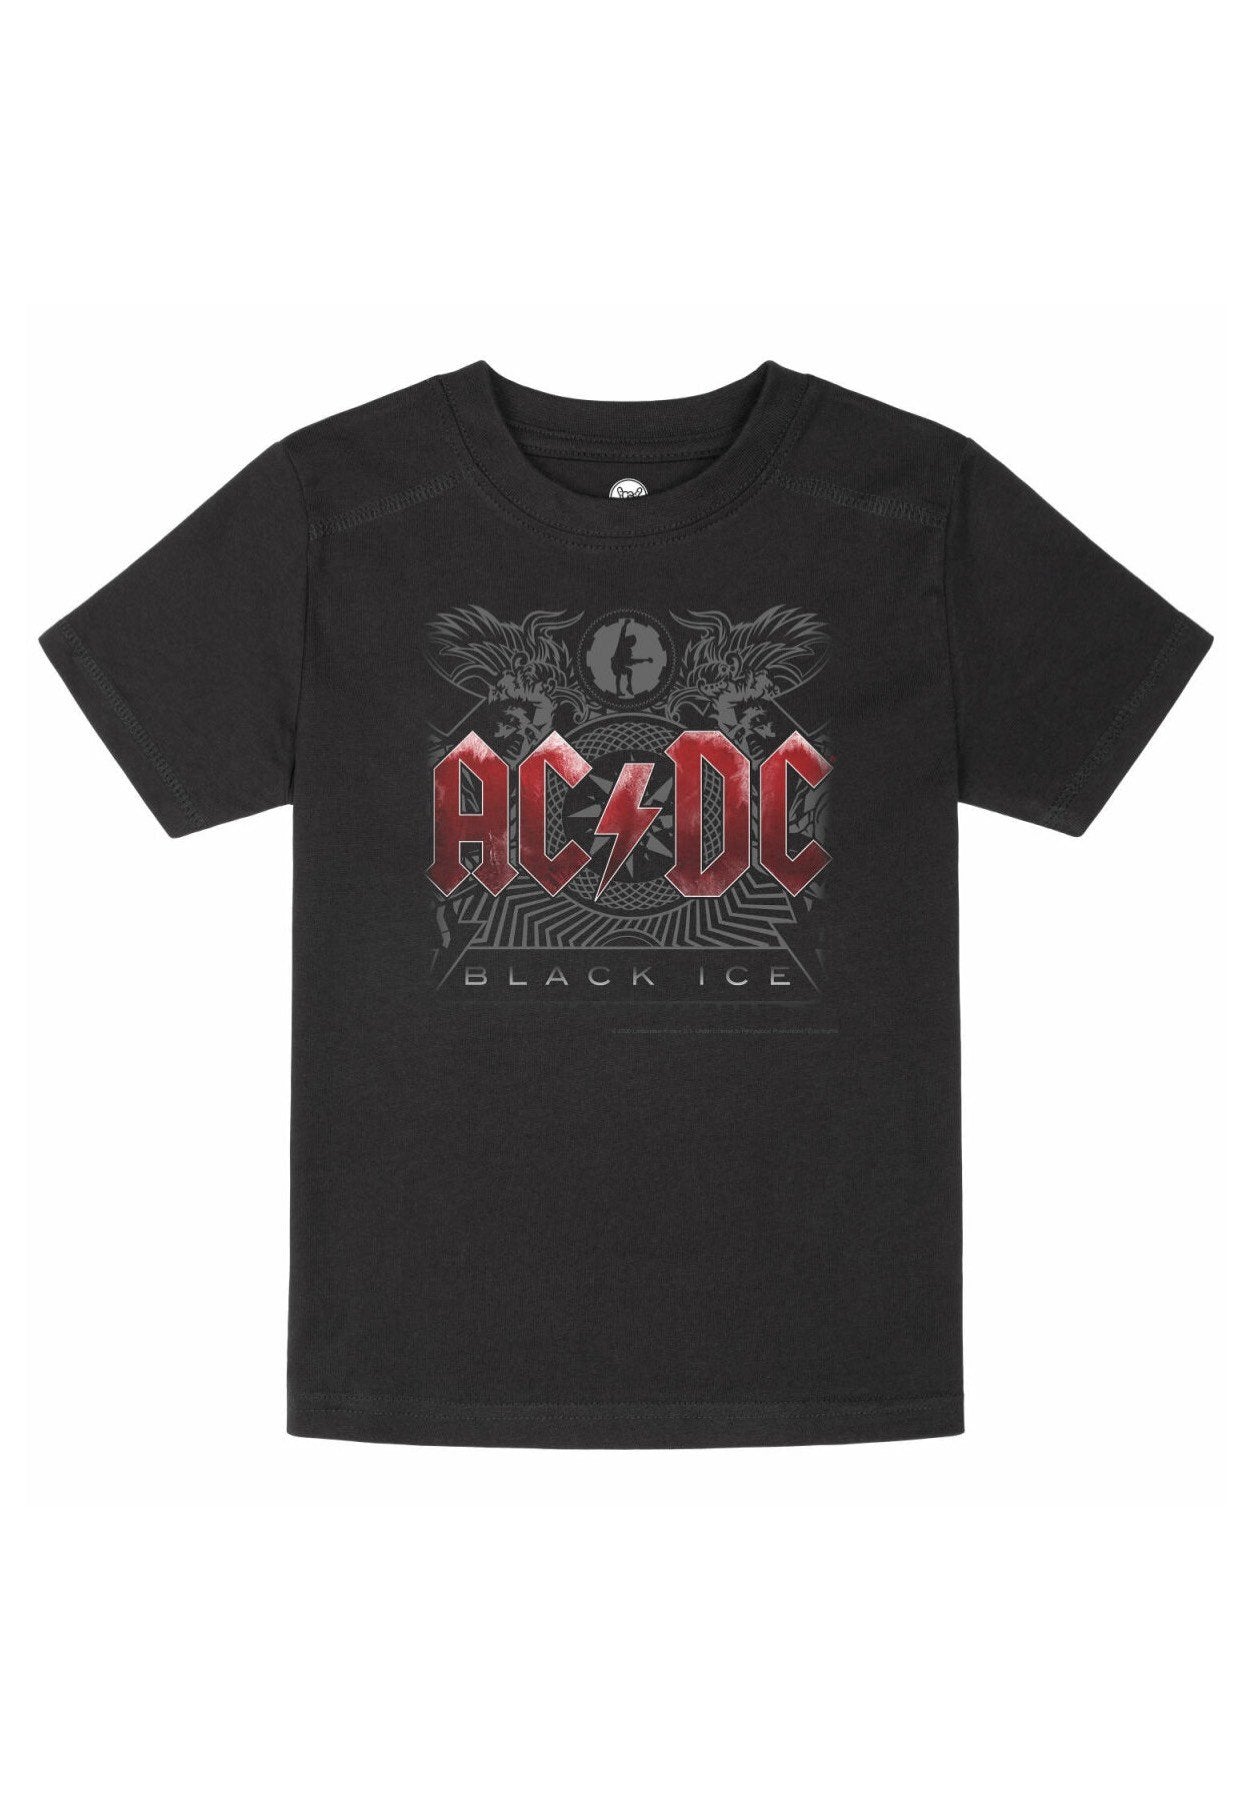 AC/DC - Back Ice Black/White Kids - T-Shirt